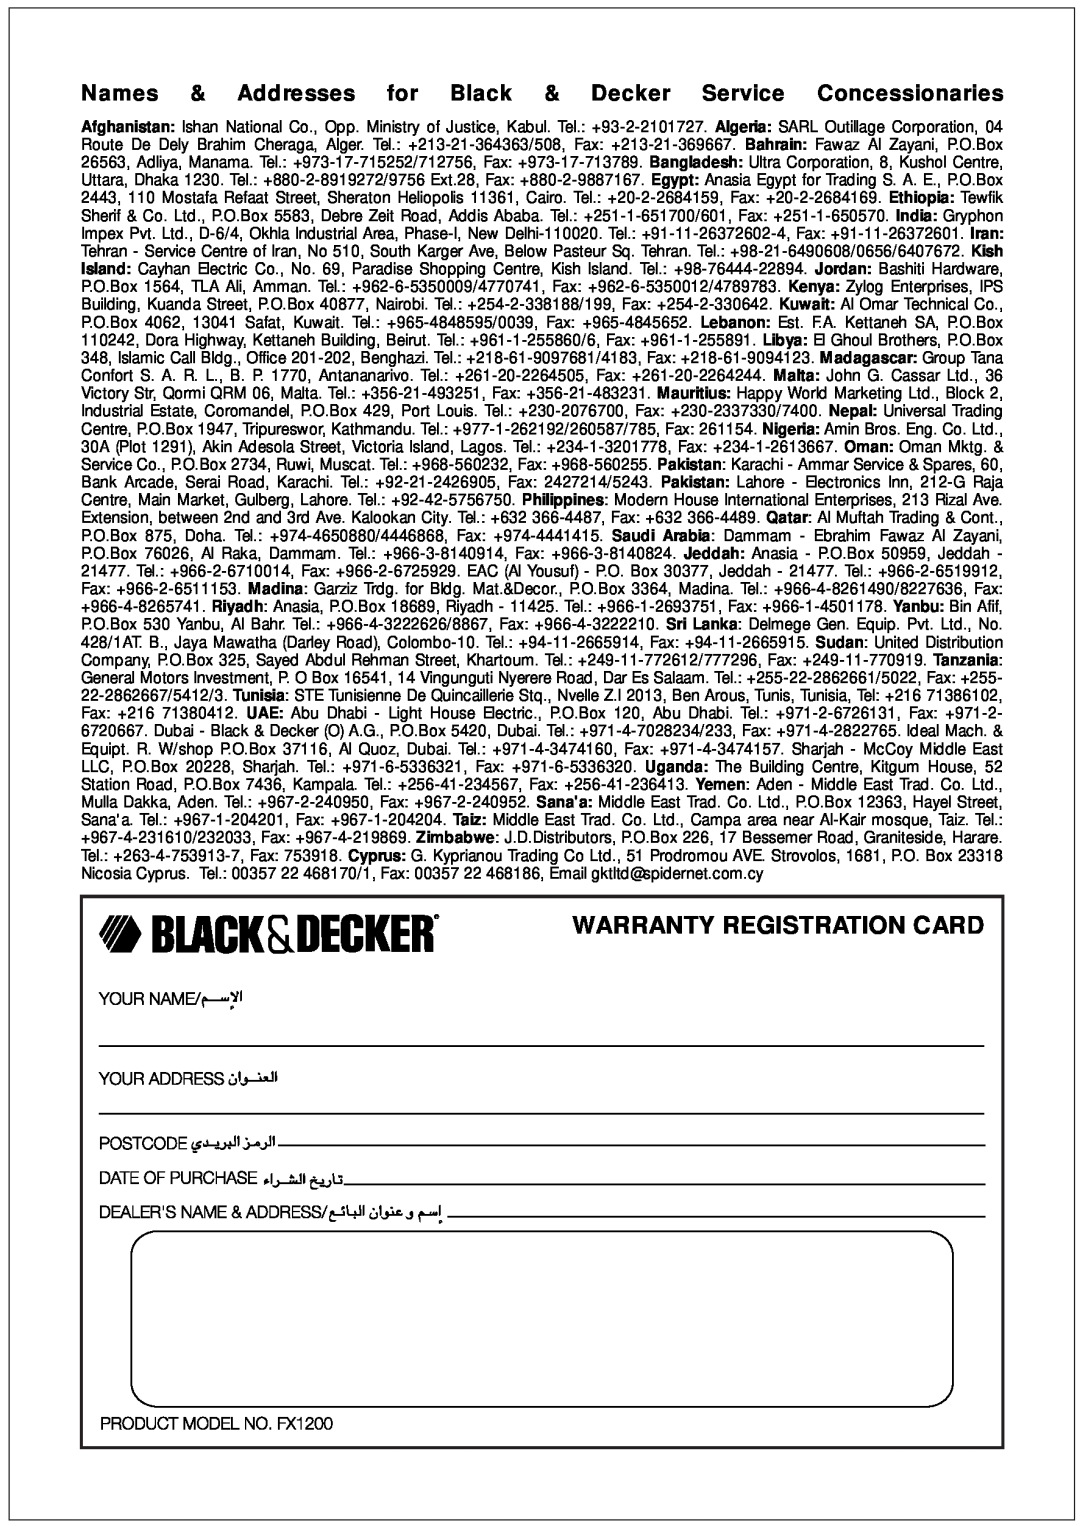 Black & Decker FX1200 manual Warranty Registration Card 